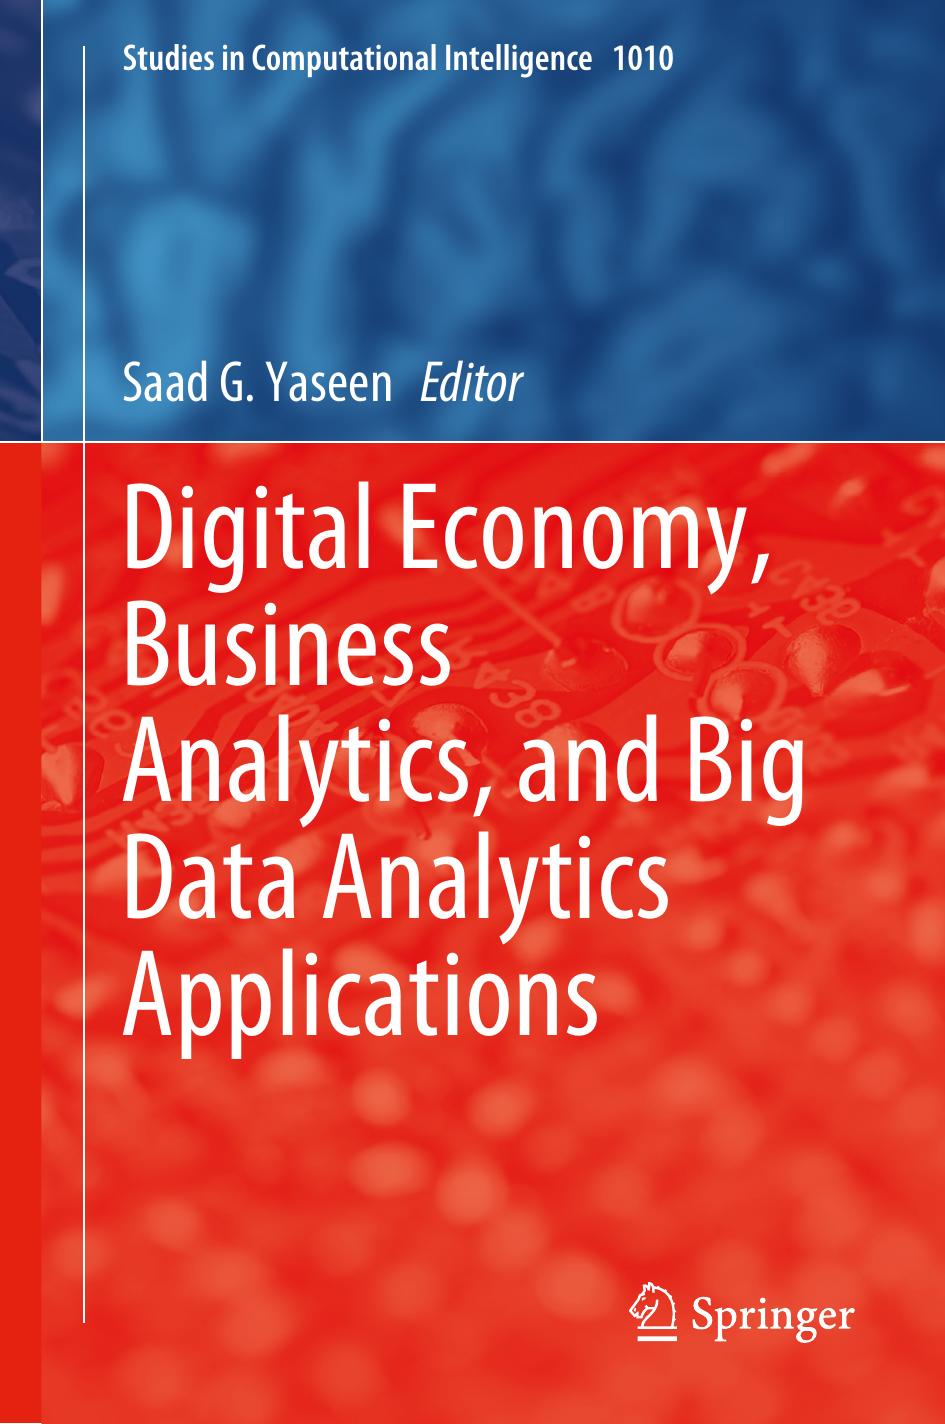 Digital Economy, Business Analytics, and Big Data Analytics Applications by Saad G. Yaseen